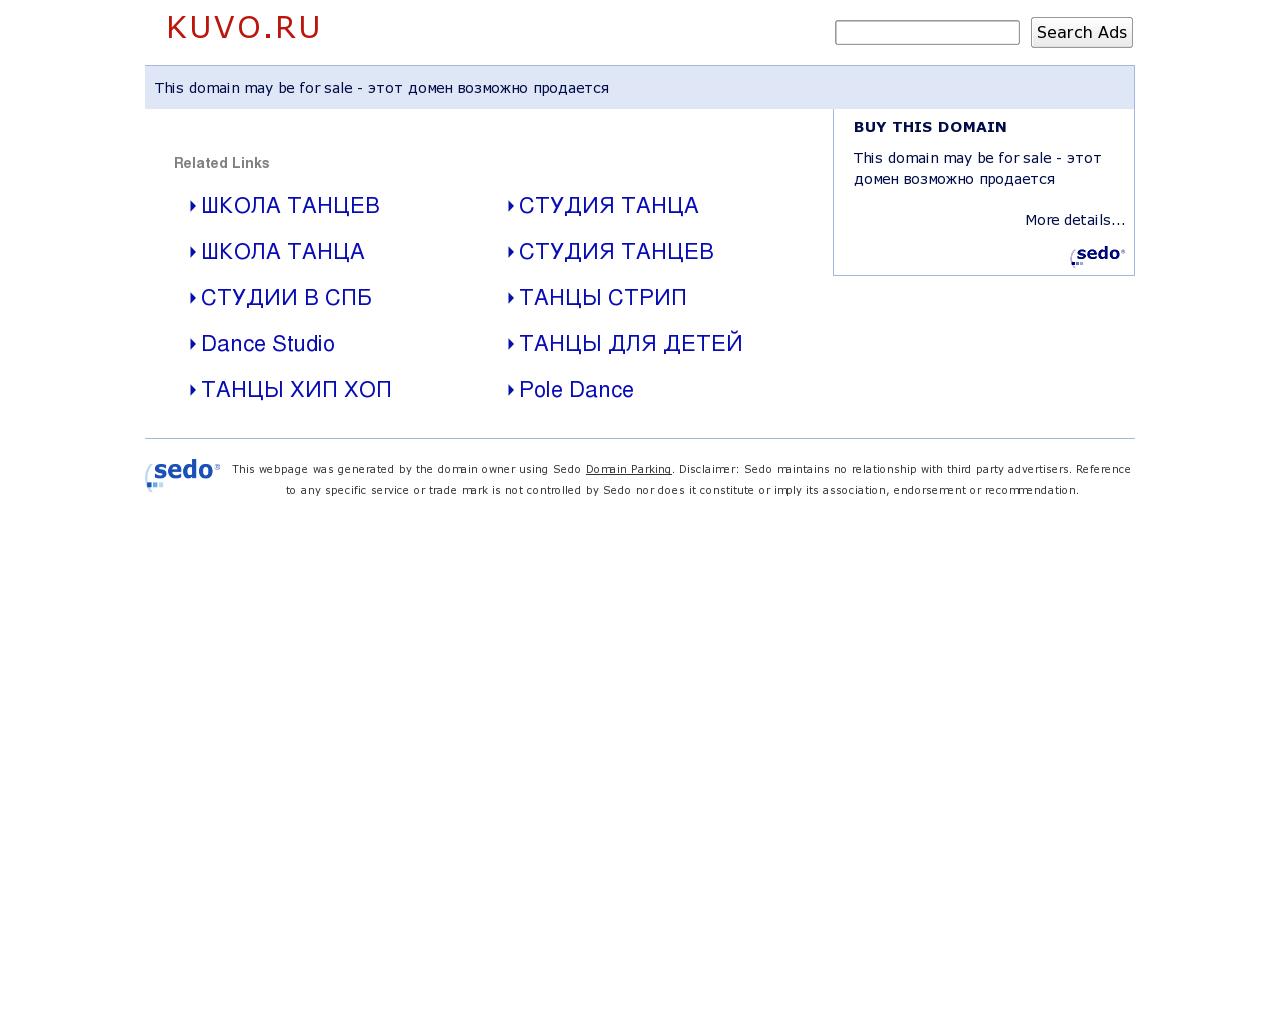 Изображение сайта kuvo.ru в разрешении 1280x1024